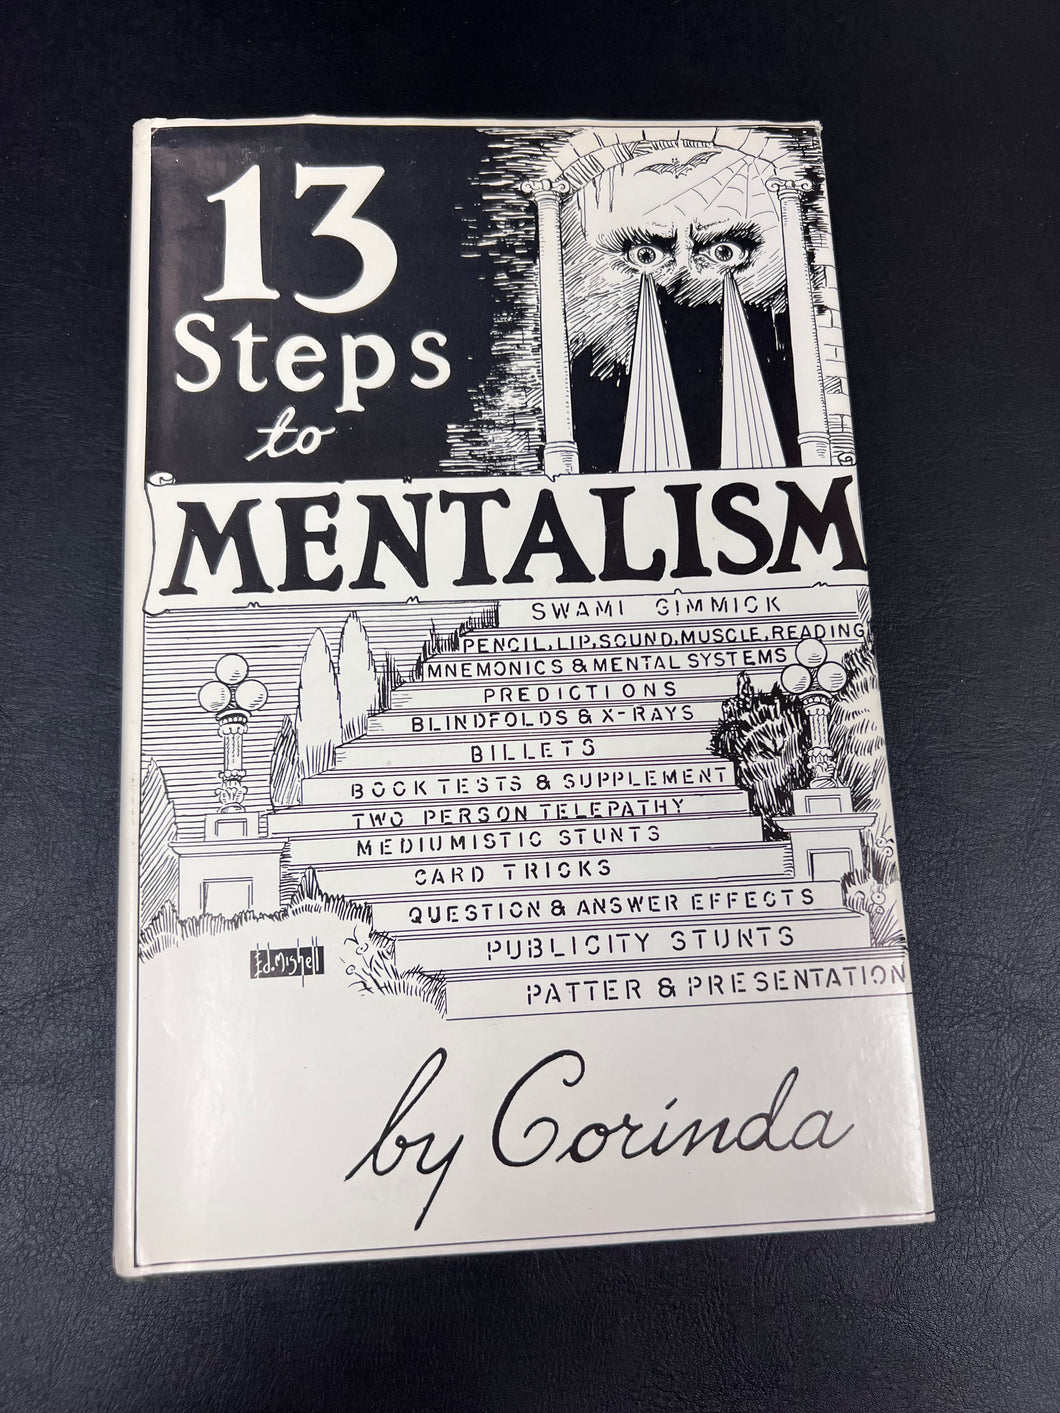 13 Steps to Mentalism by Tony Corinda